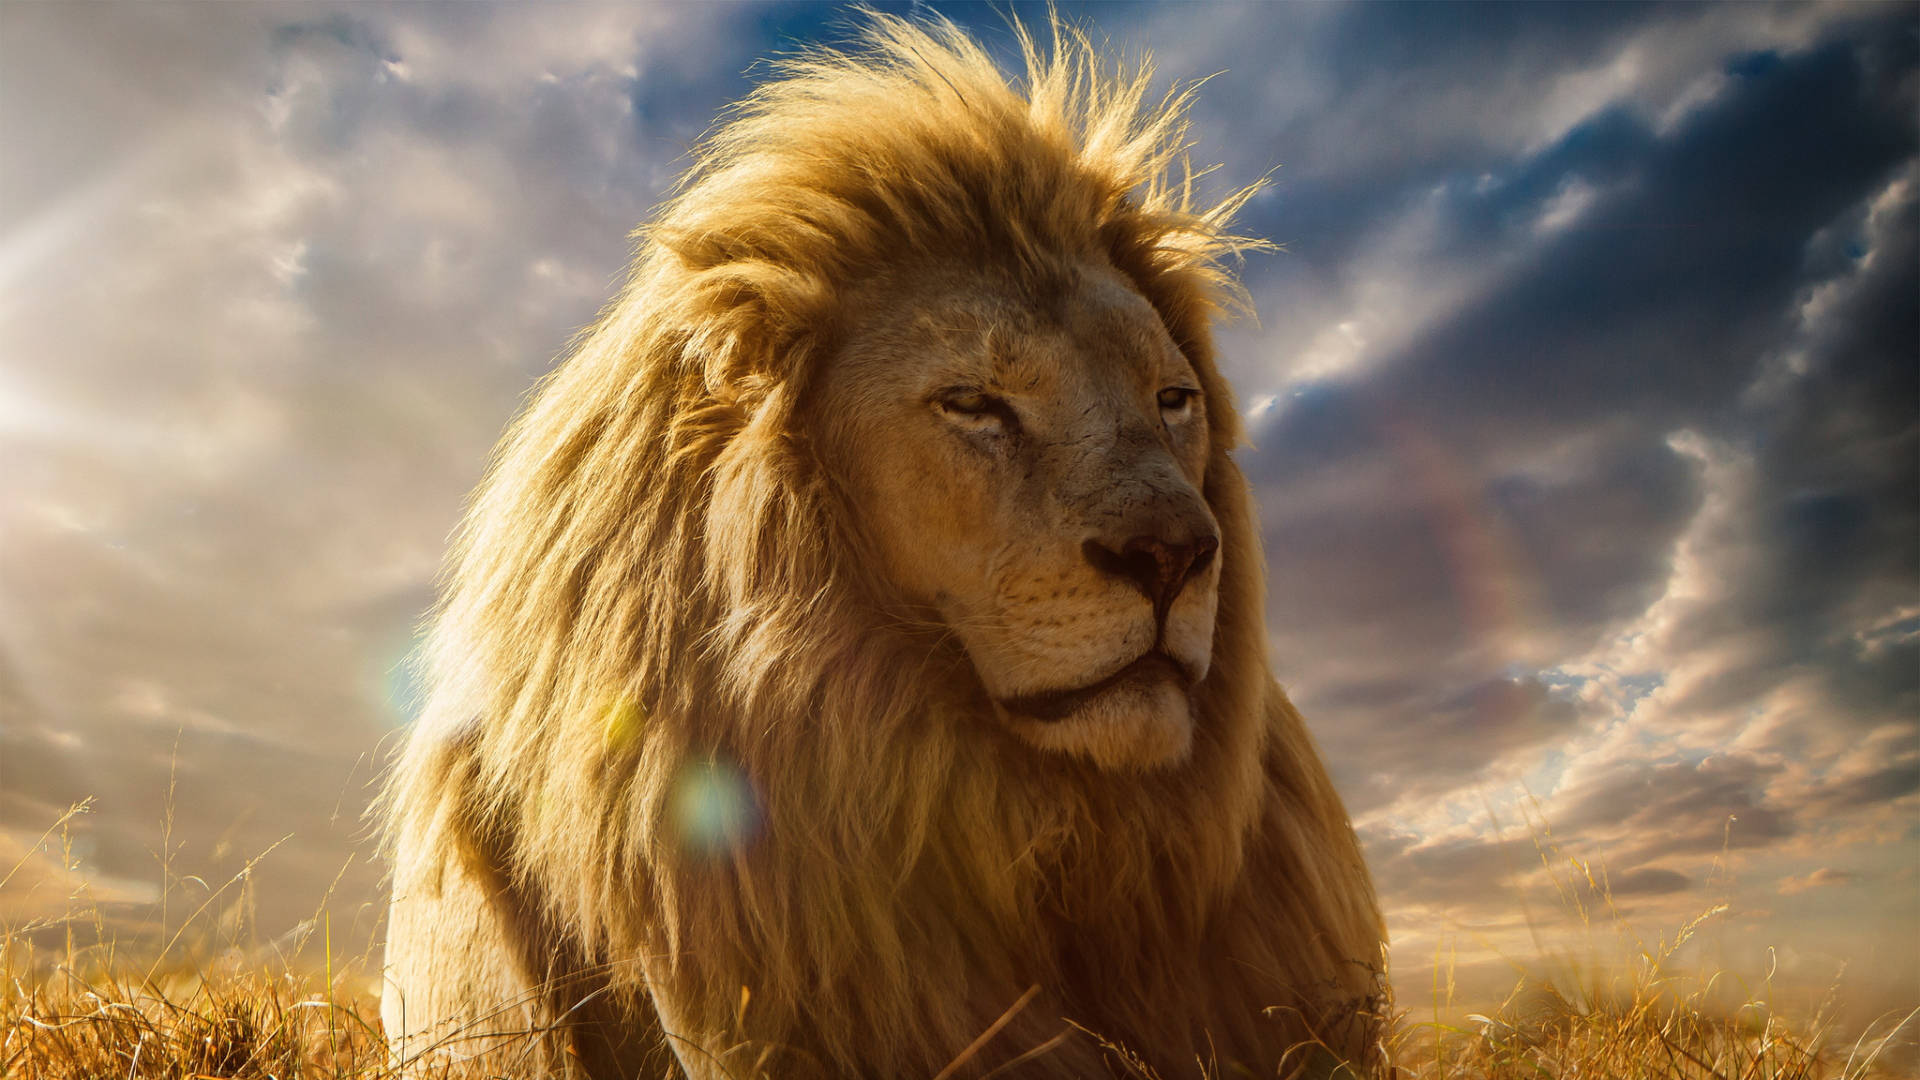 Lion In The Wild Full Screen Desktop Wallpaper